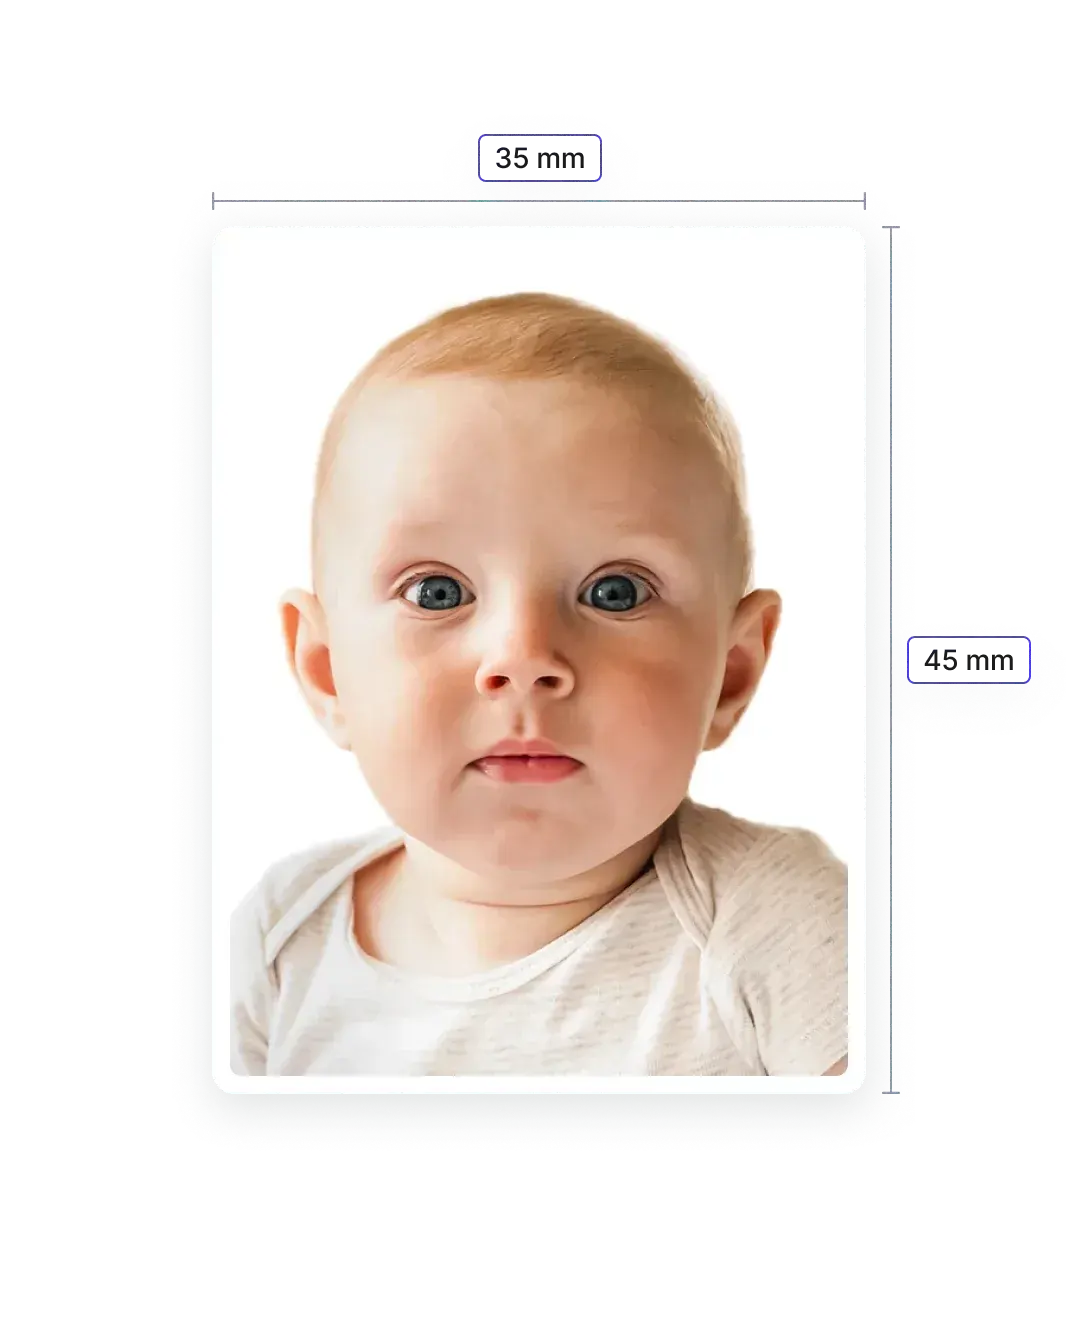 Baby Passport Photo NZ—Specifications